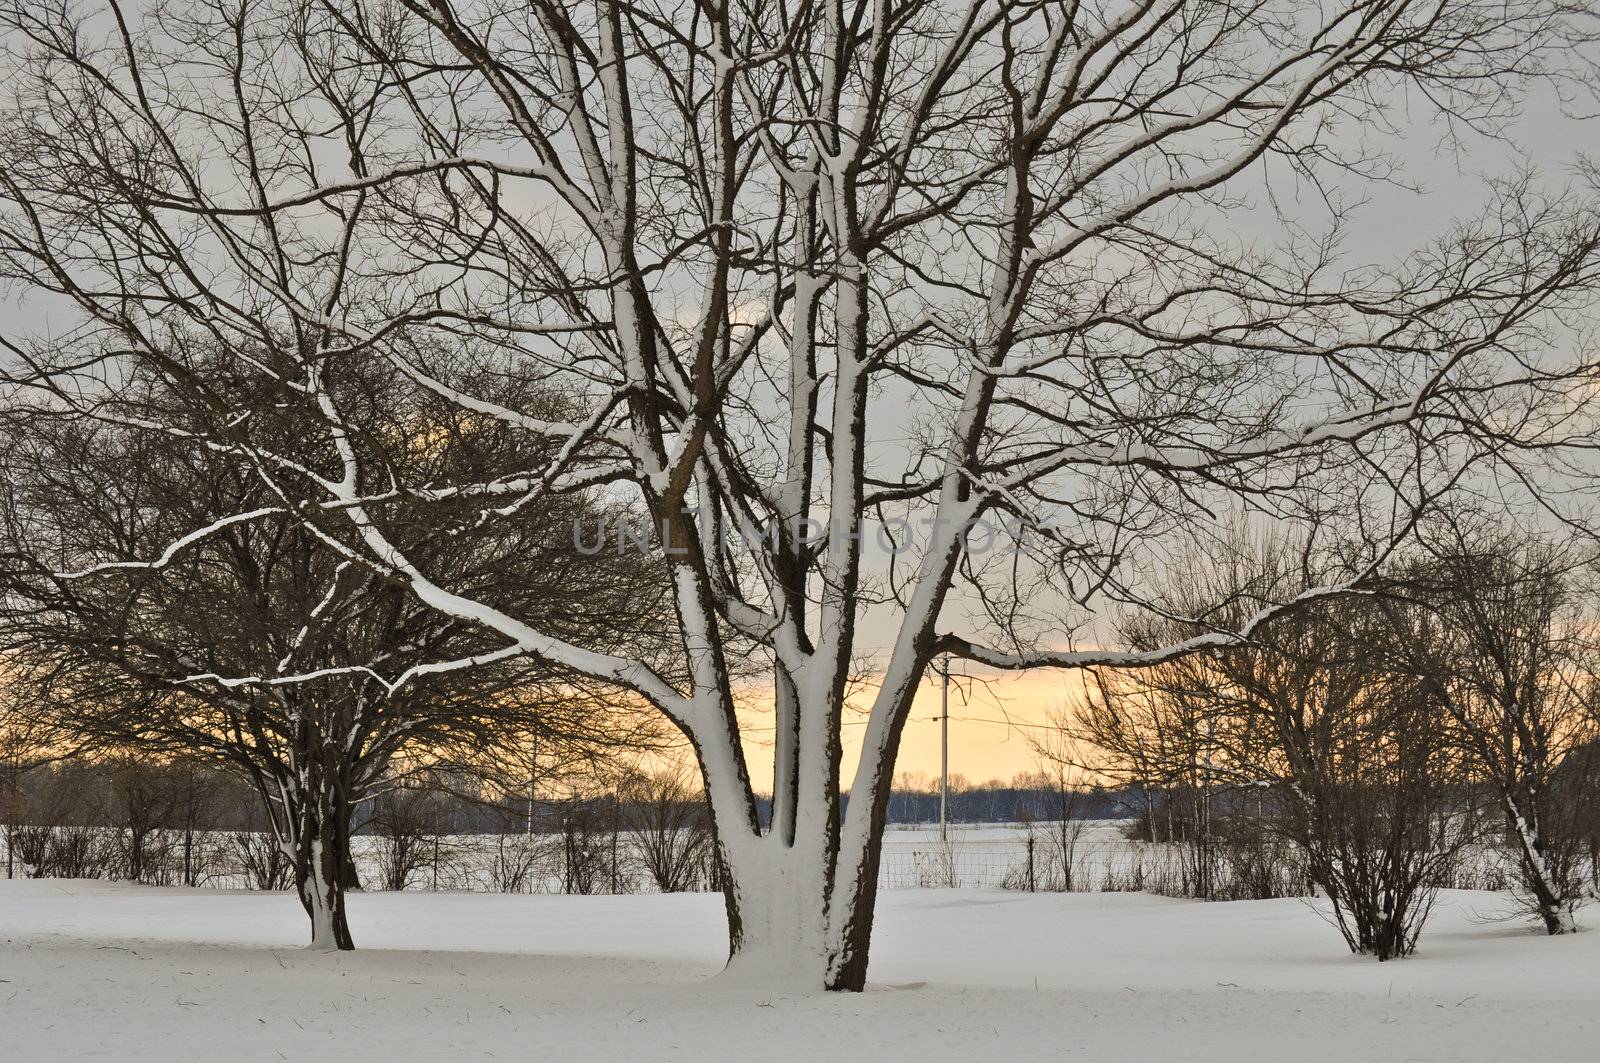 Snowy Tree at Sunset